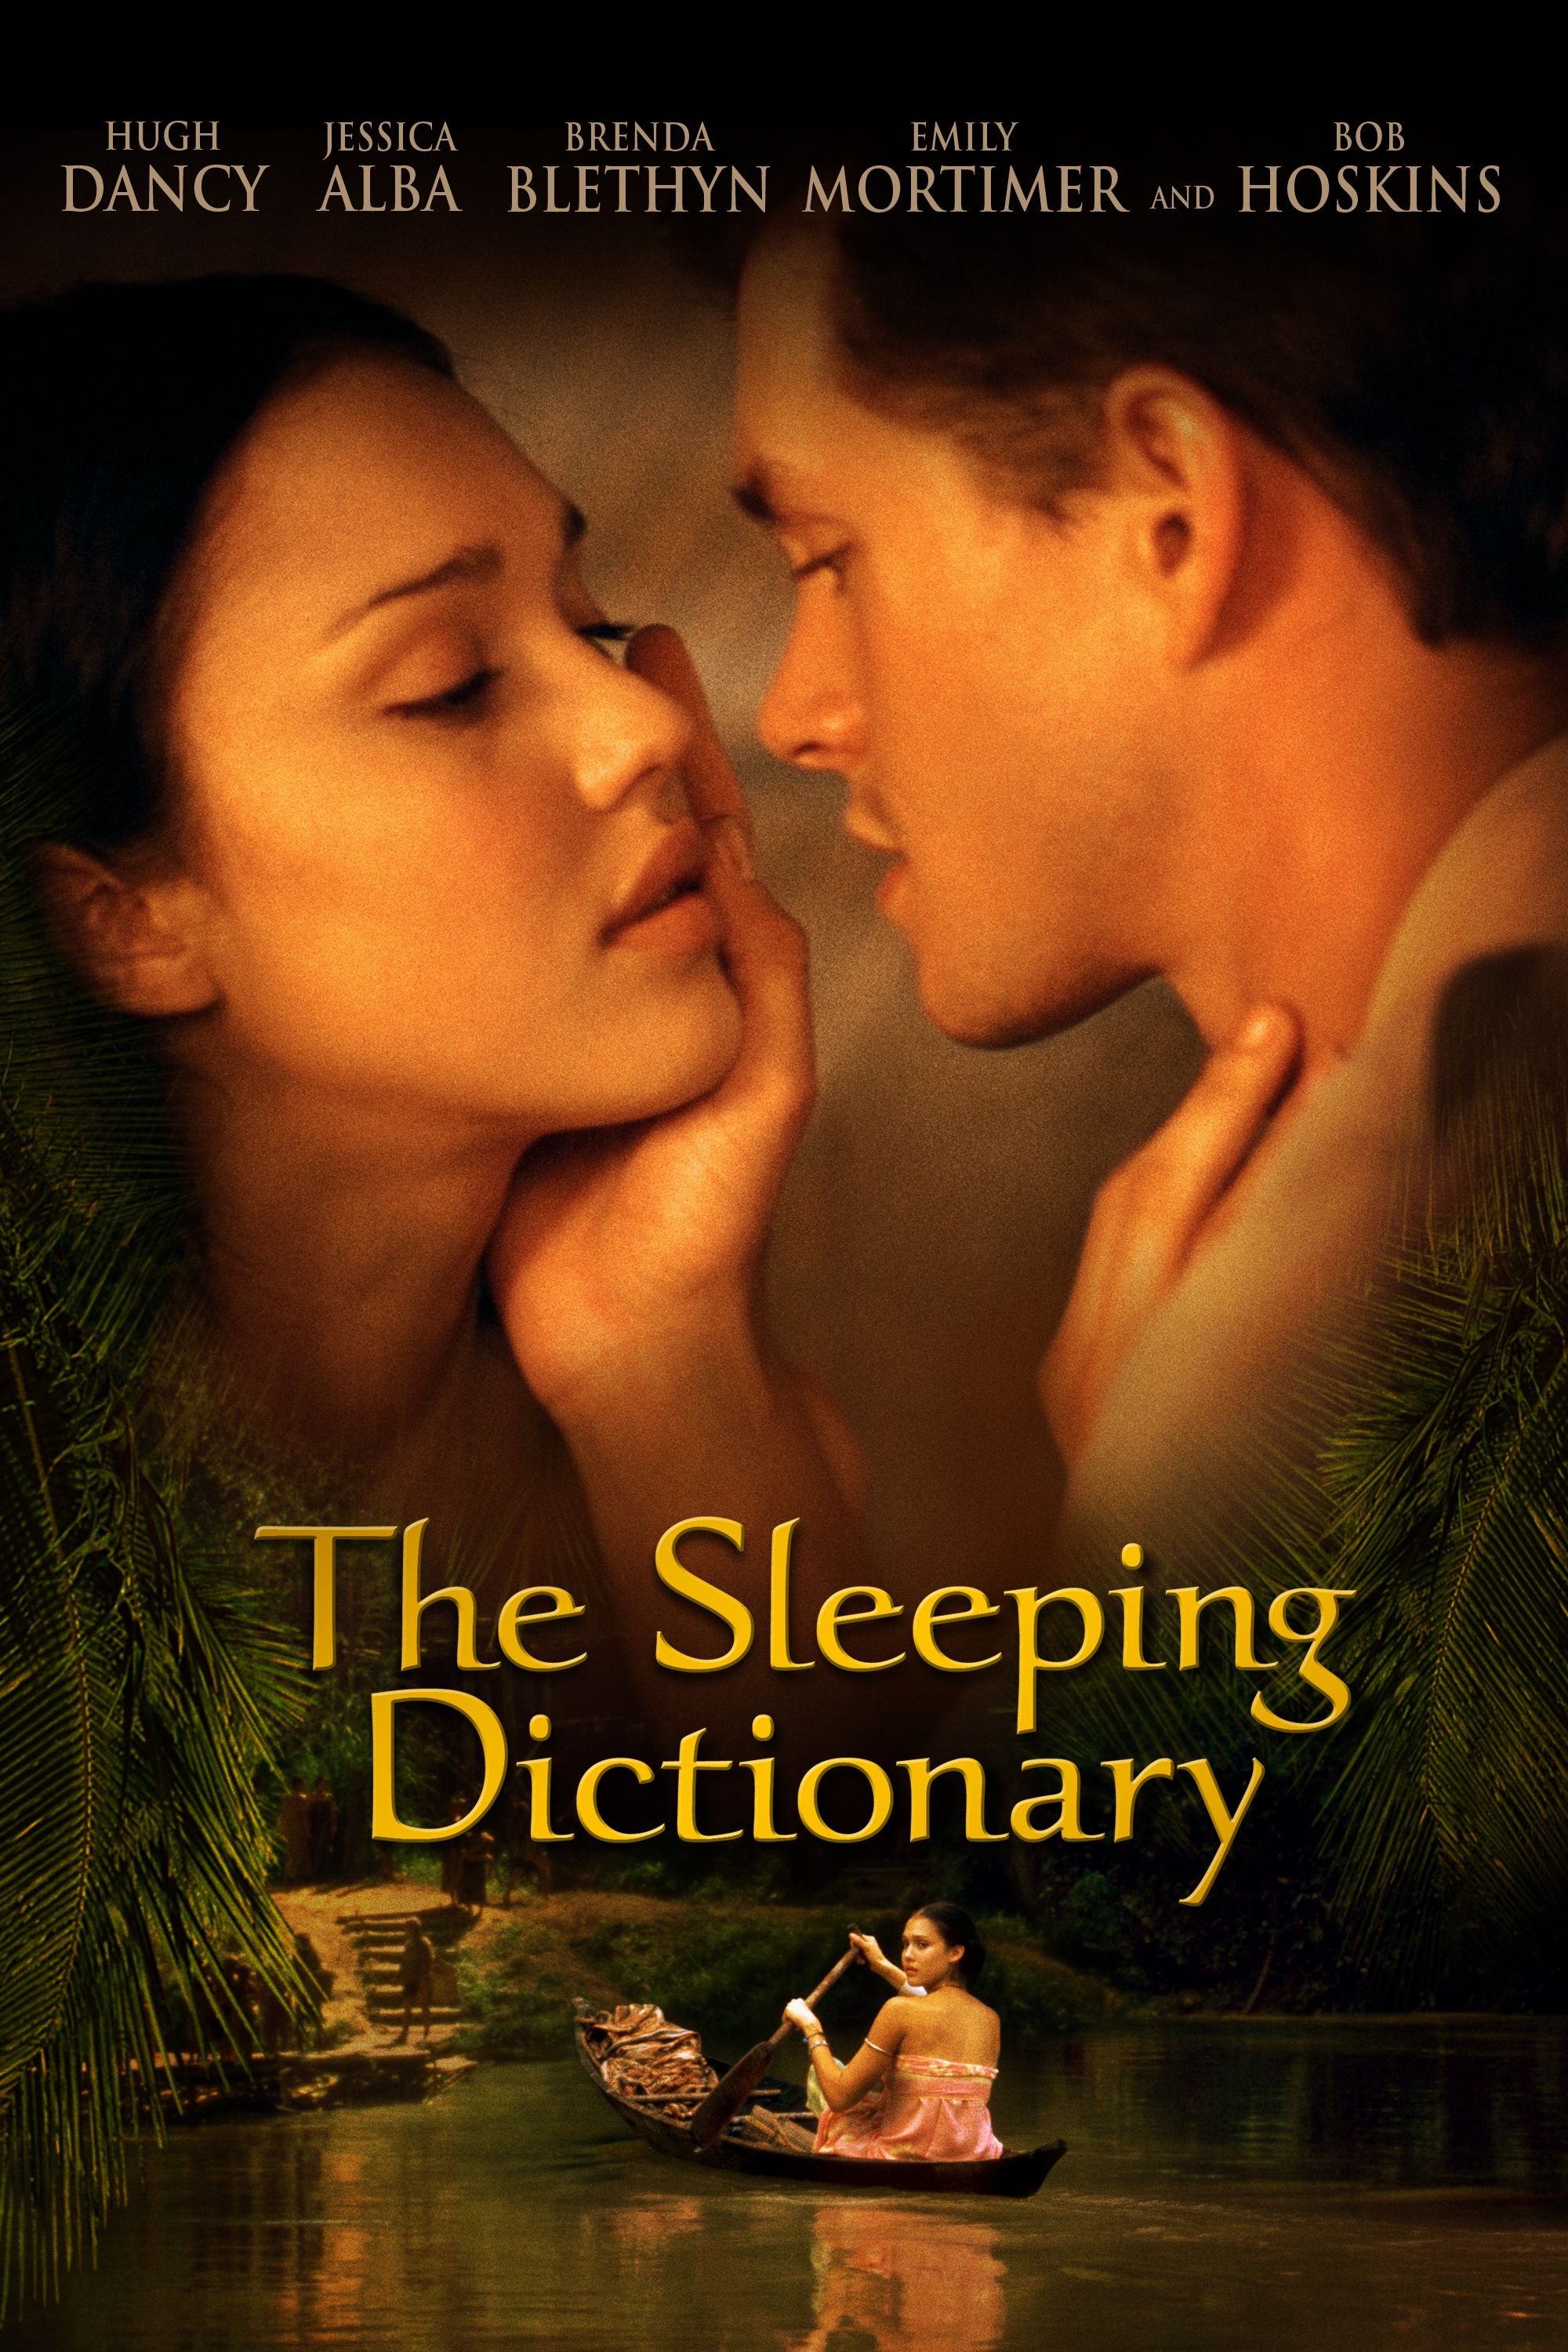 The sleeping dictionary 123movies